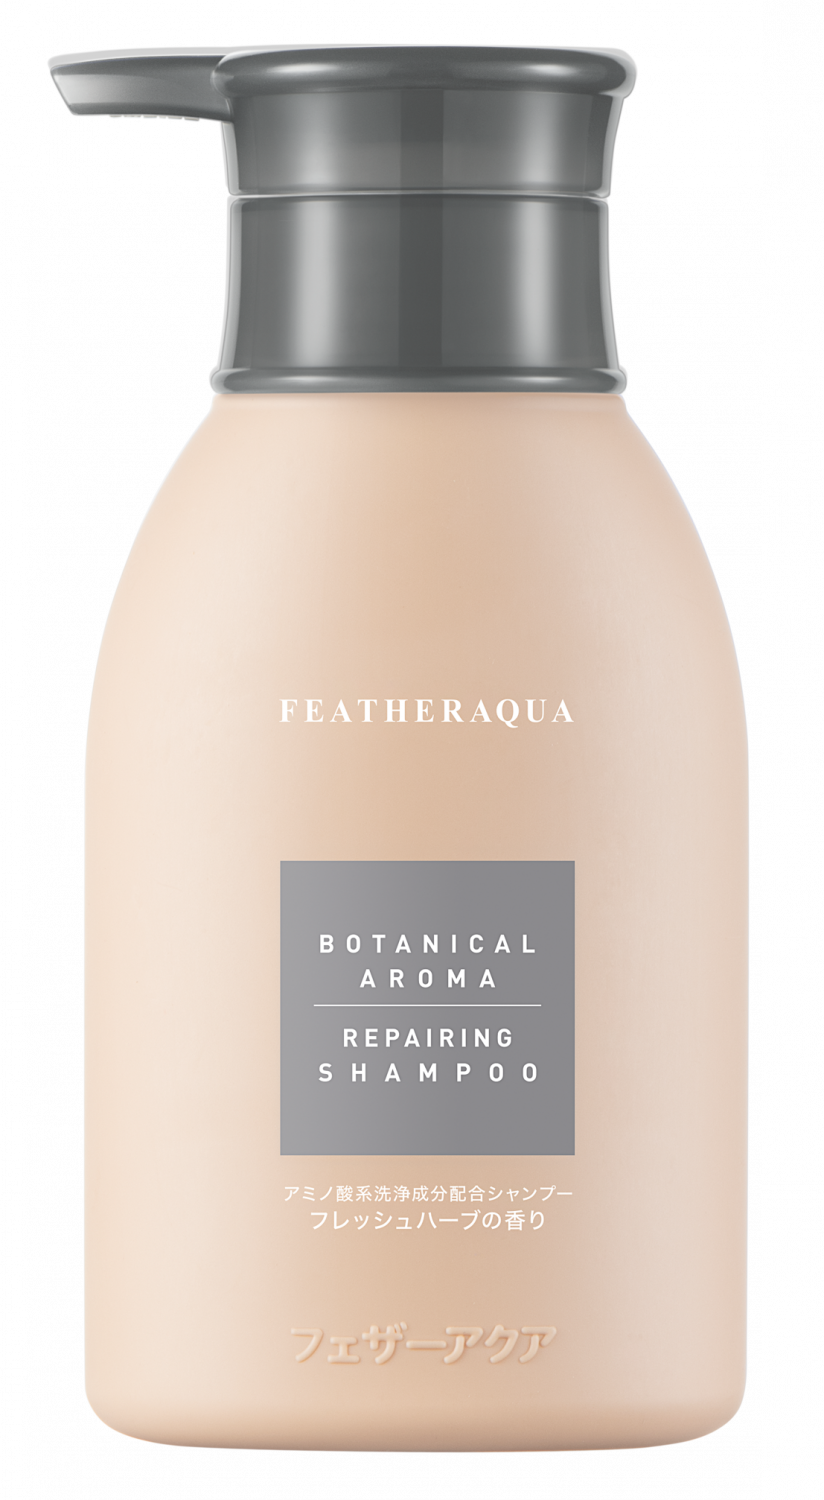 Featheraqua Botanical Aroma Repairing Shampoo J6 280ml - интернет-магазин профессиональной косметики Spadream, изображение 41786